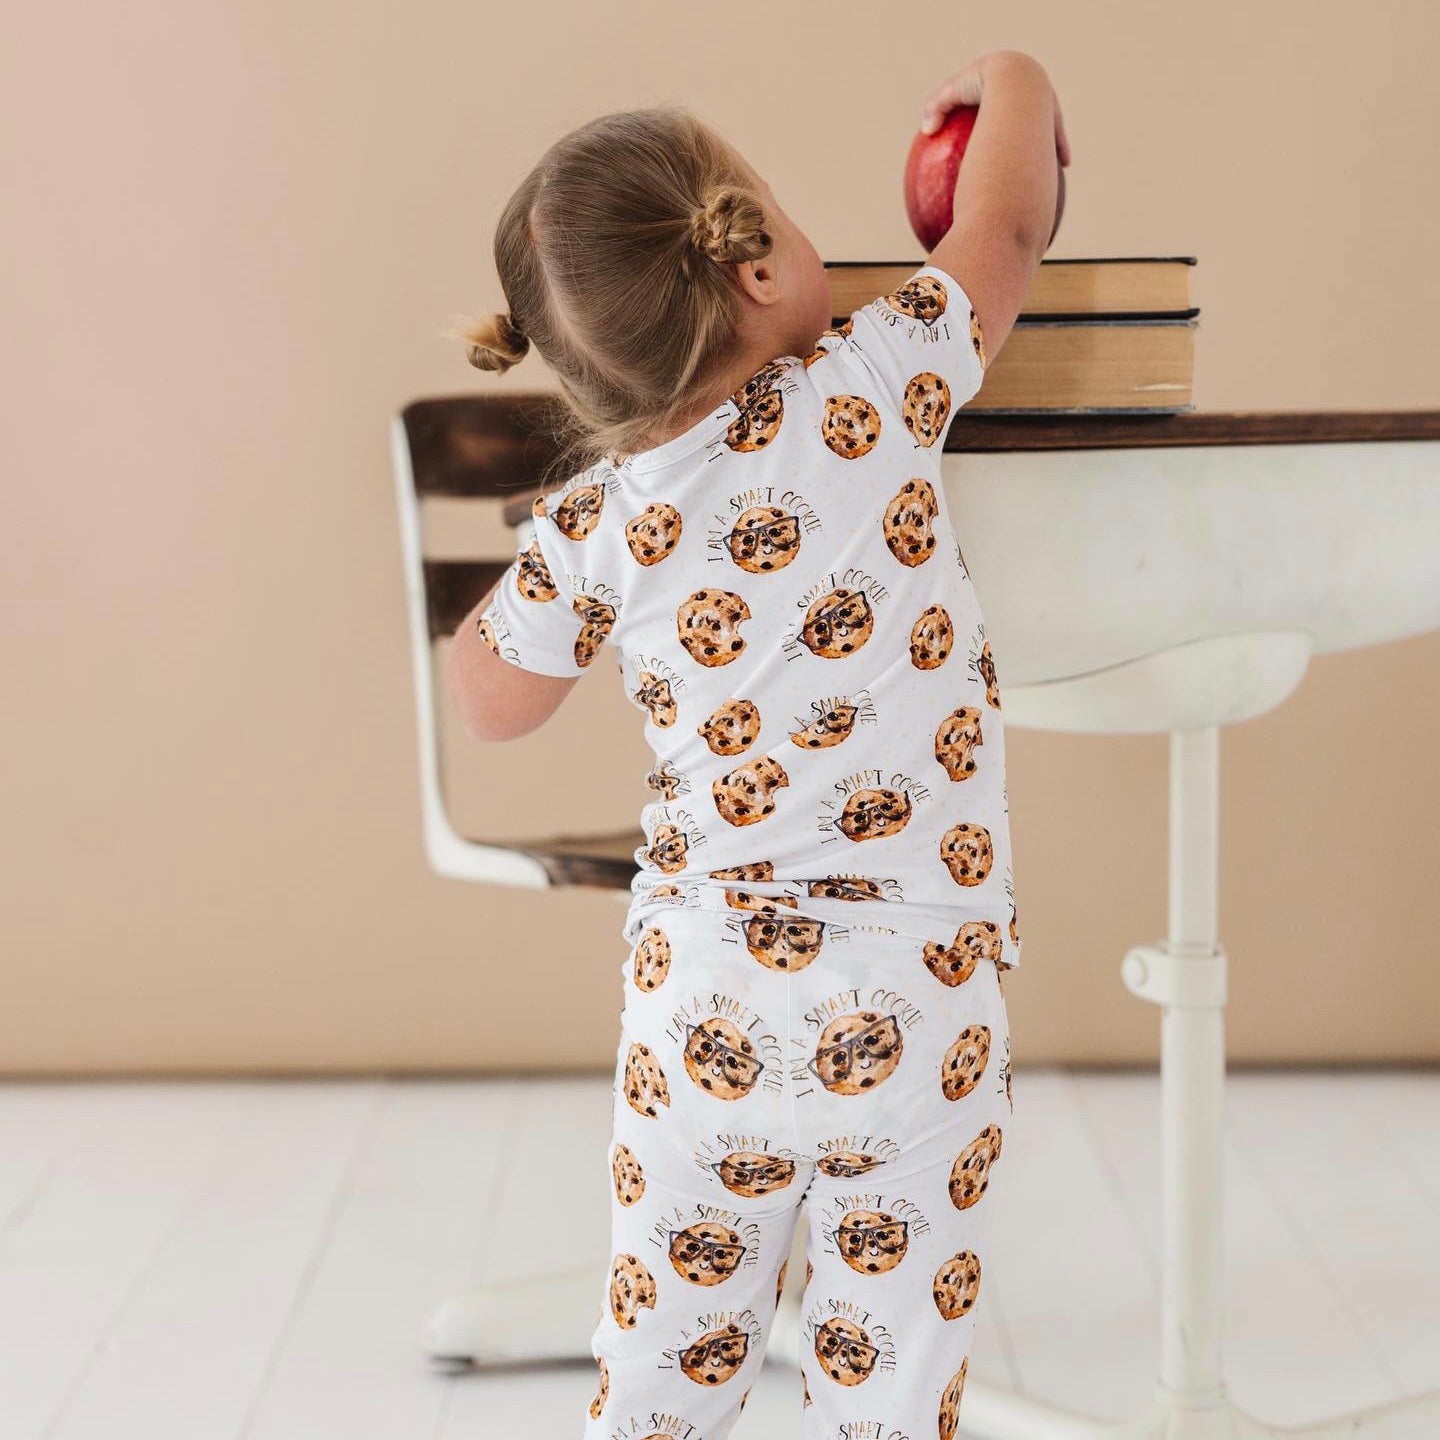 Smart Cookie - Pyjama Party - Kids Enjoying Pyjama Party 